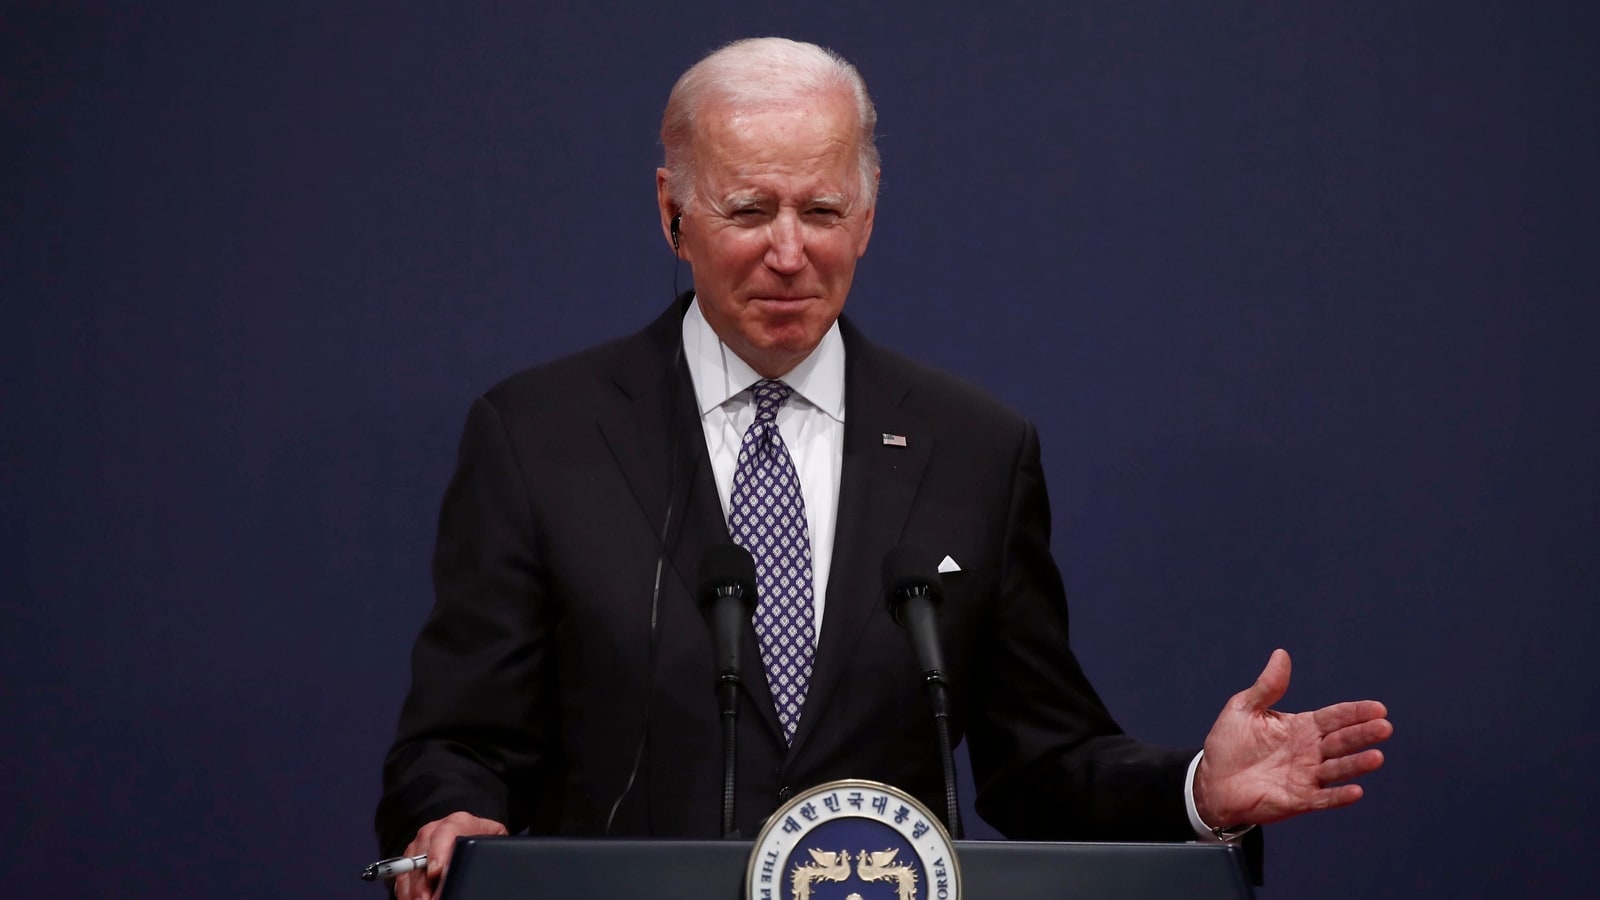 Biden says Putin's nuclear threat brings risk of 'Armageddon'